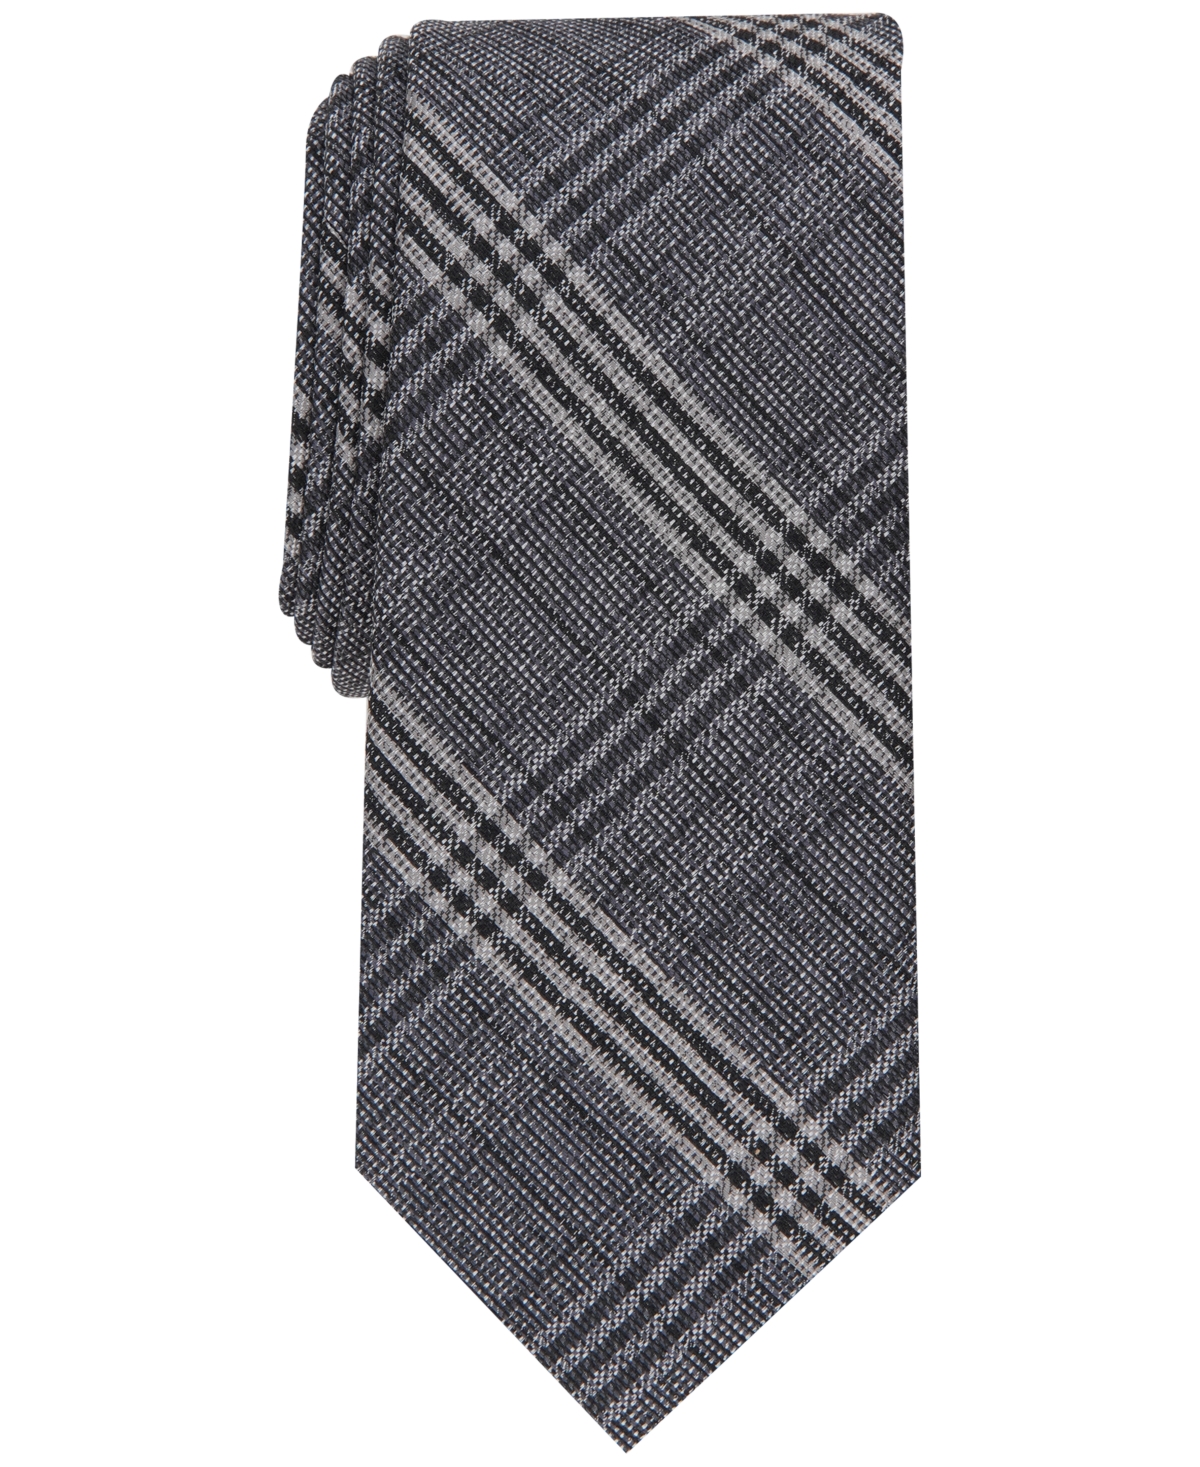 Men's Slim Plaid Tie, Created for Macy's - Black